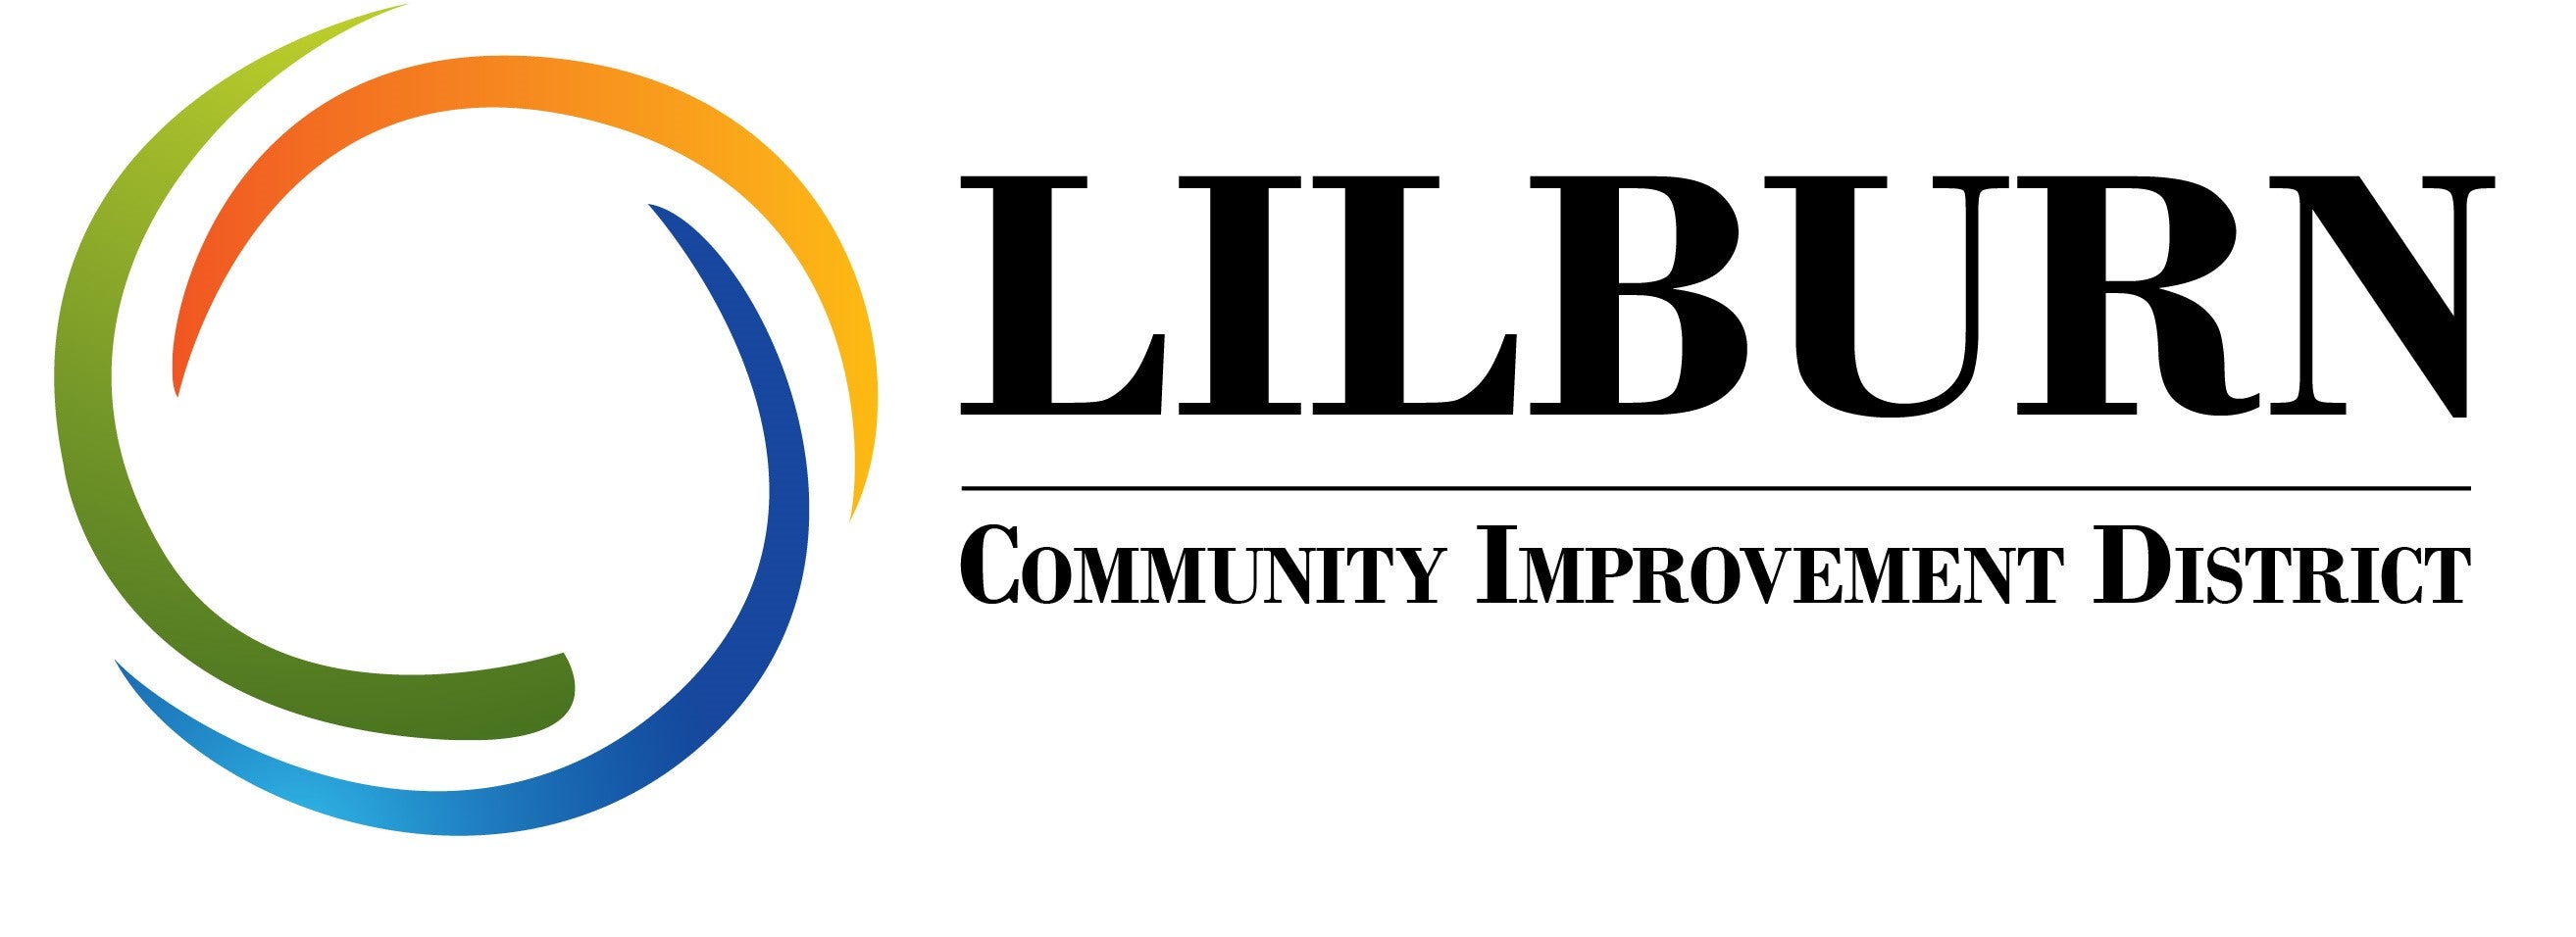 Lilburn Logo Hi Res.jpg